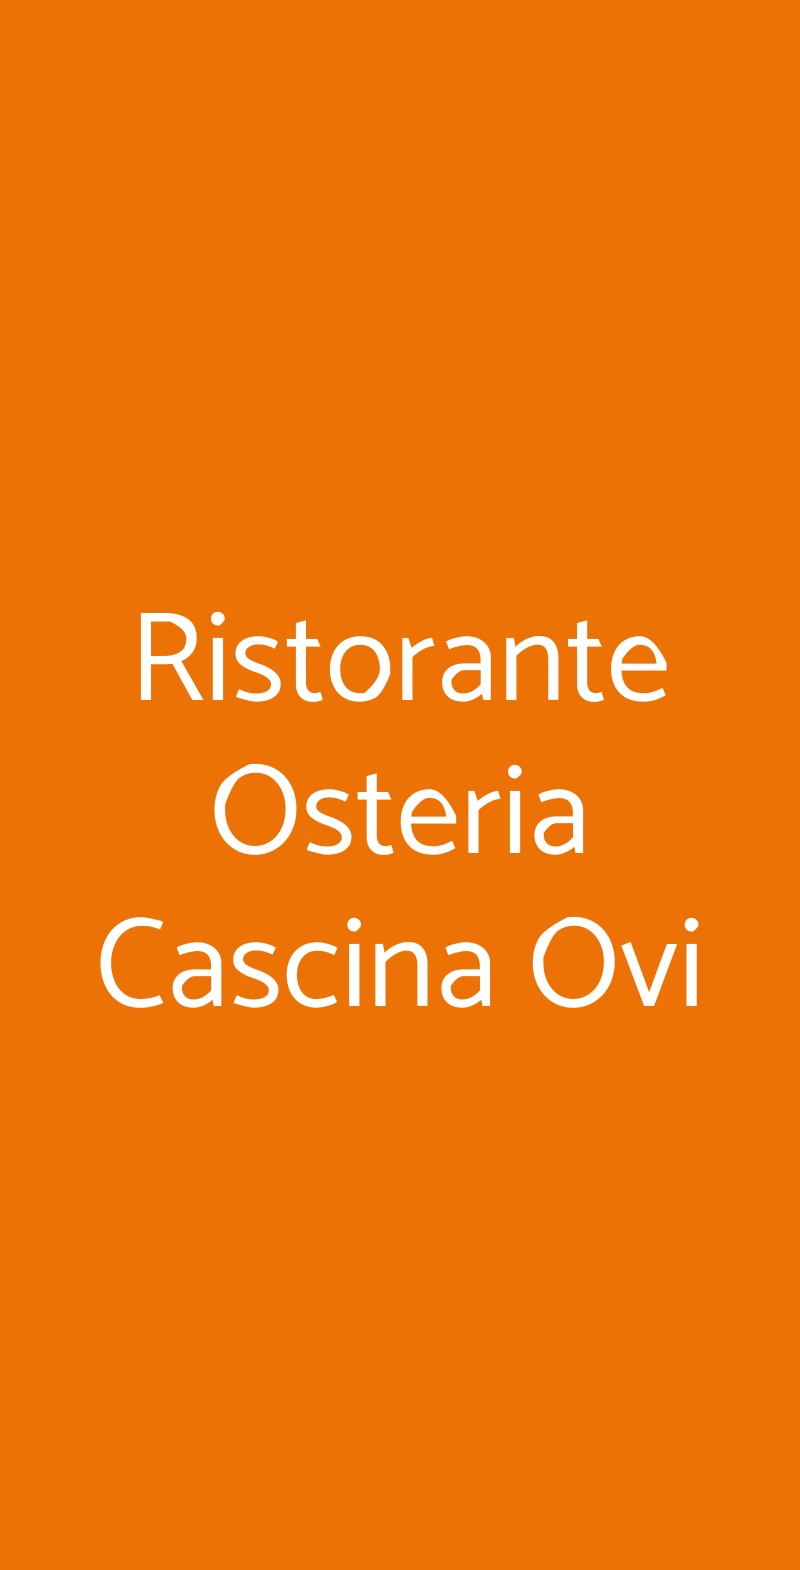 Ristorante Osteria Cascina Ovi Segrate menù 1 pagina